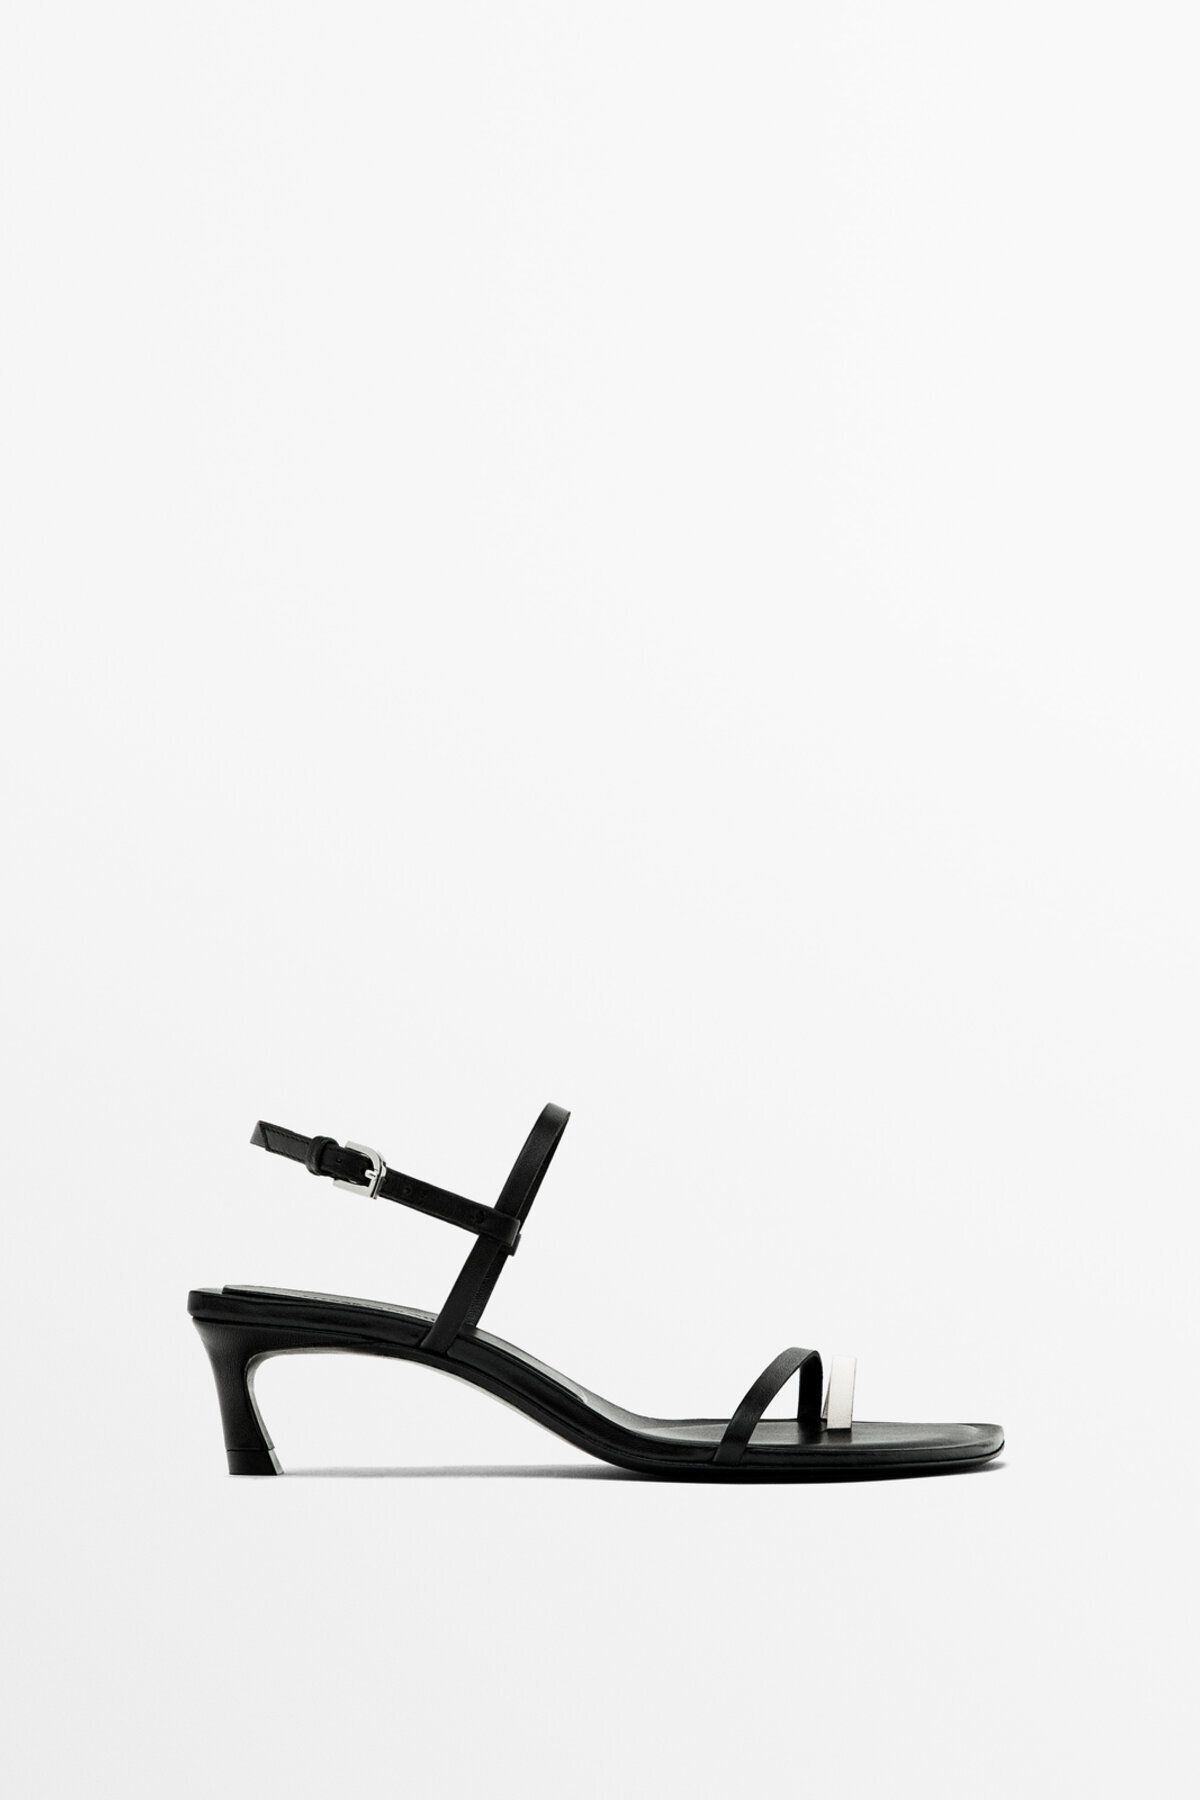 Massimo Dutti Limited Edition - Topuklu sandalet